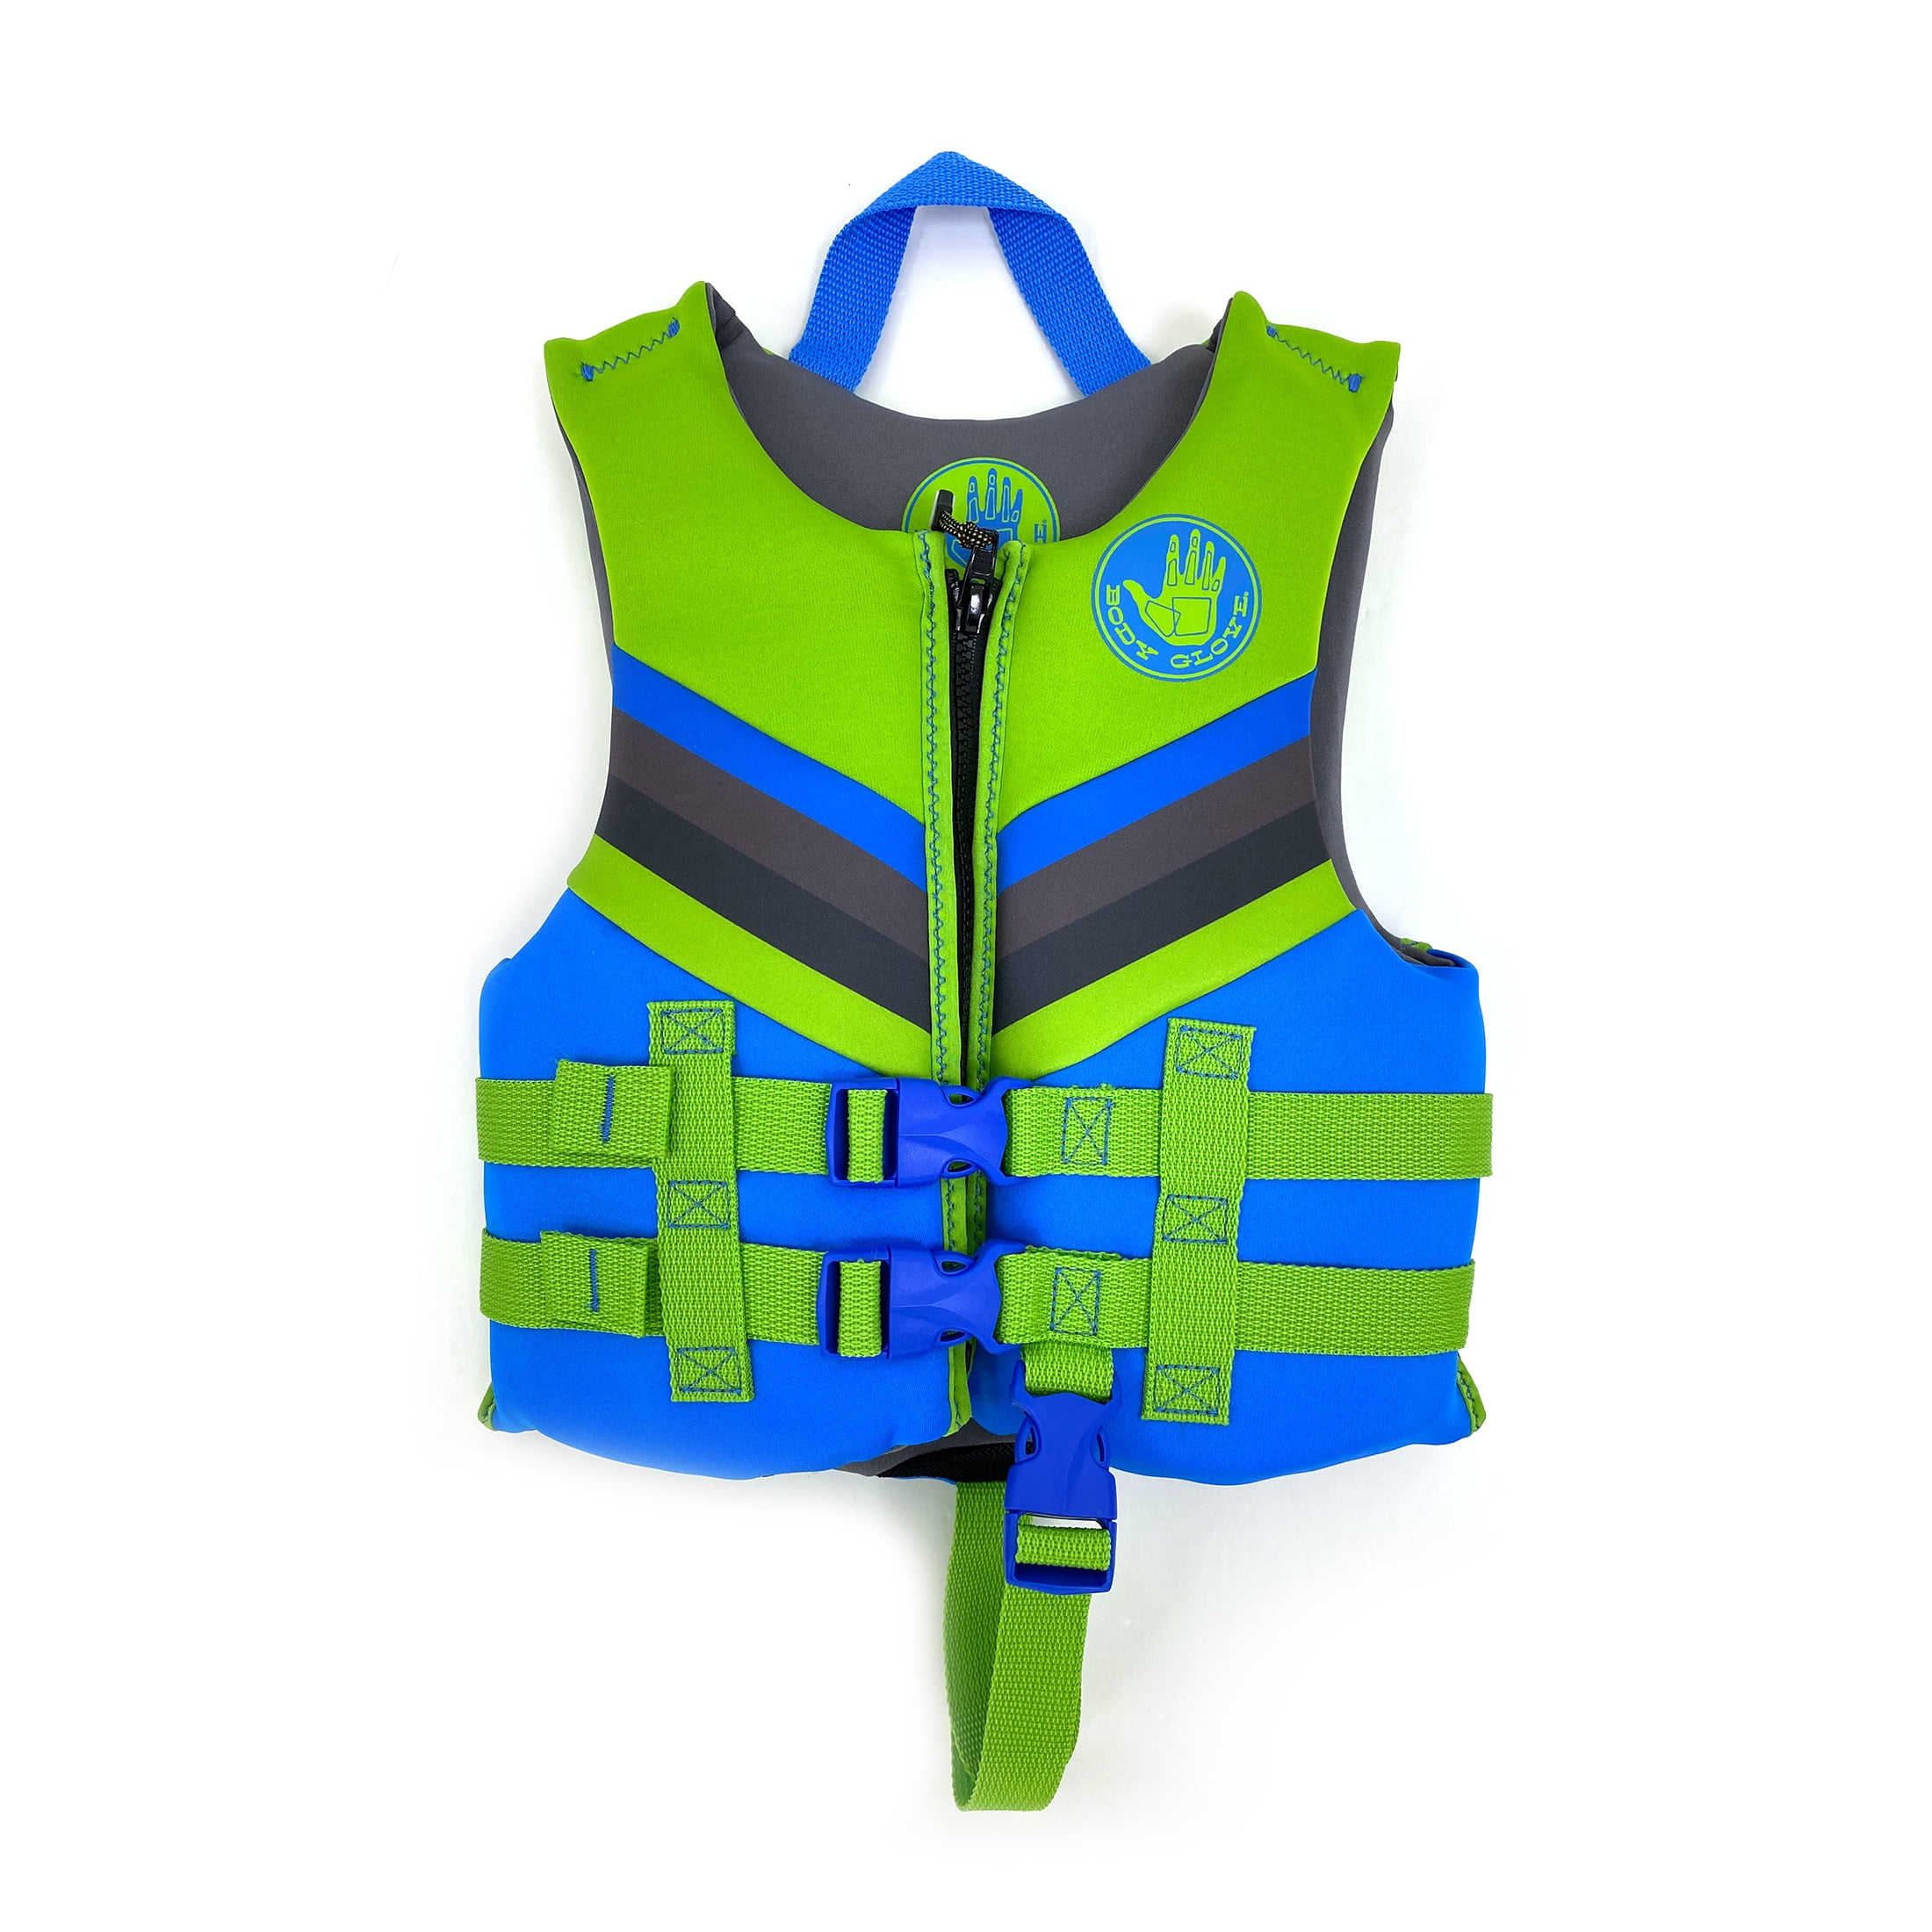 UK KIDS CHILDREN LIFE JACKETS SWIMMING Floating Swim Vest Buoyancy Aid Jacket 